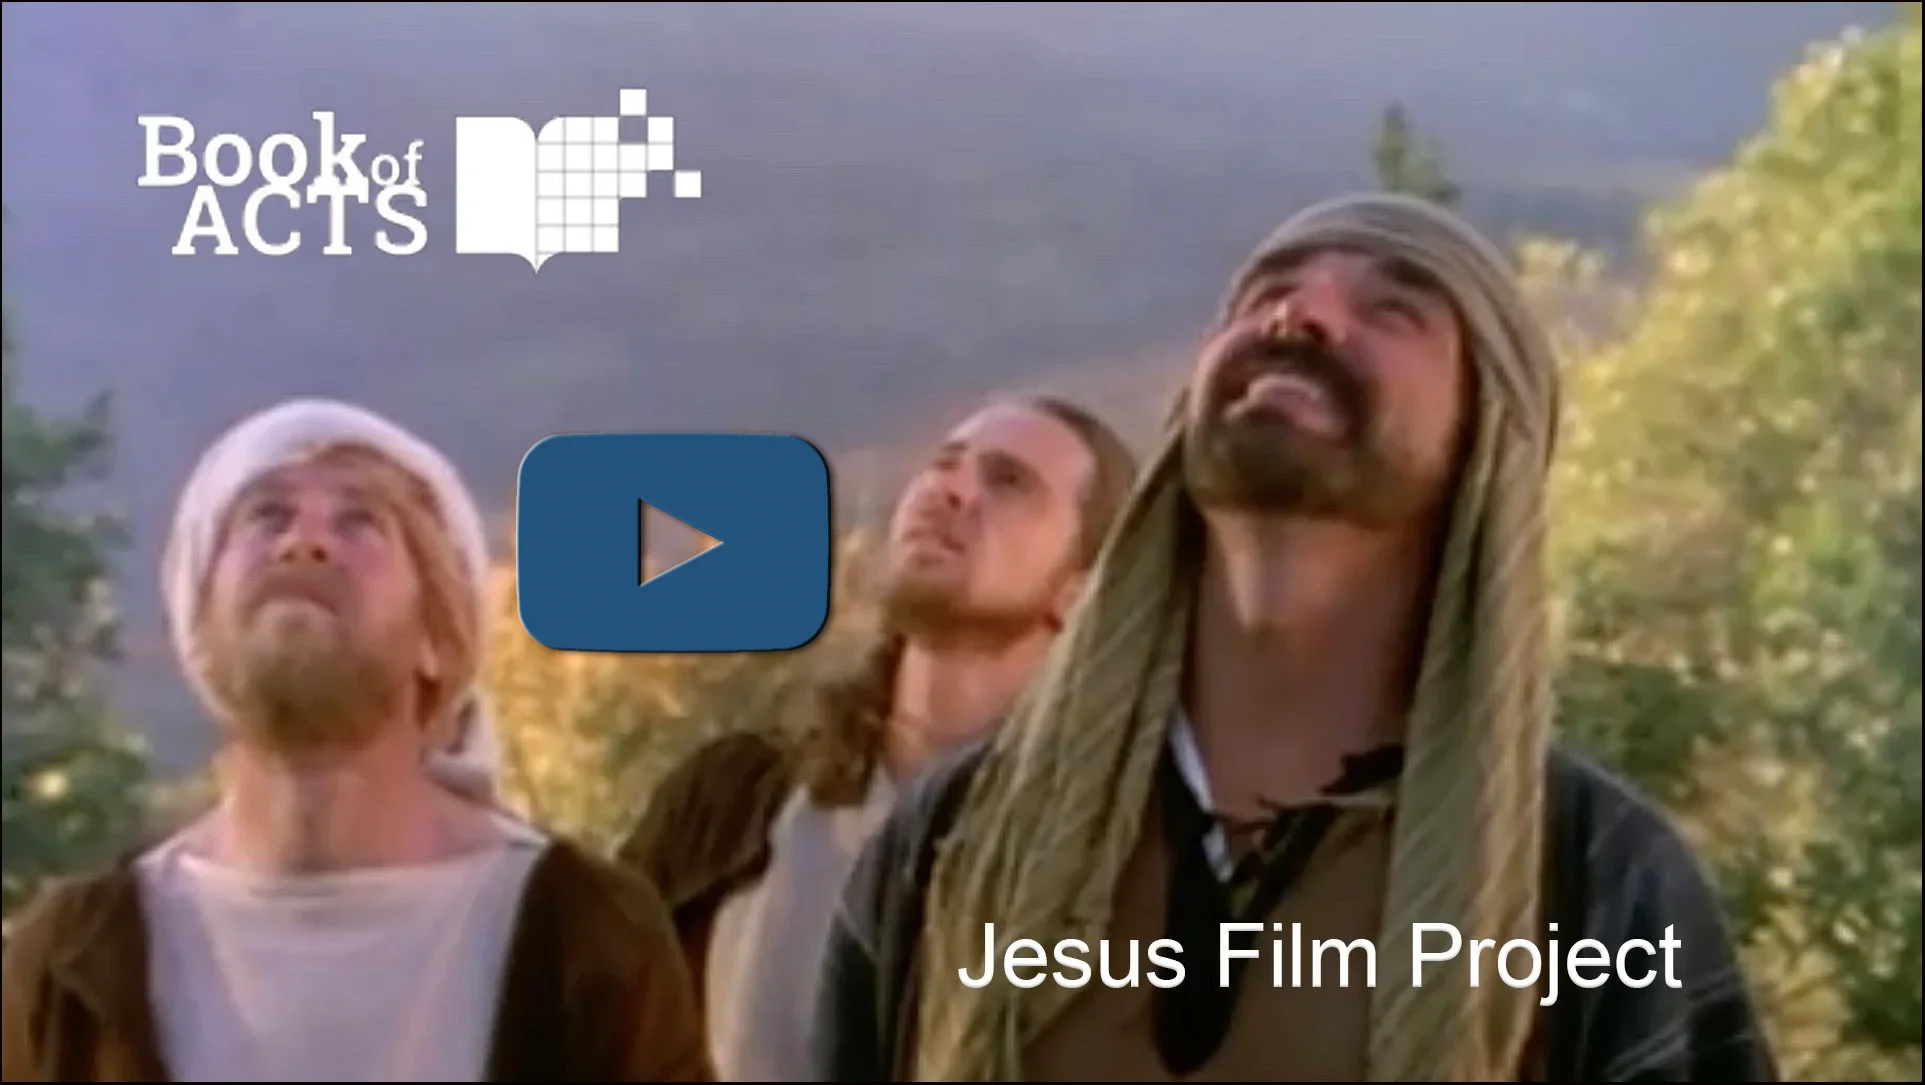 Jesus Film Project clickable image